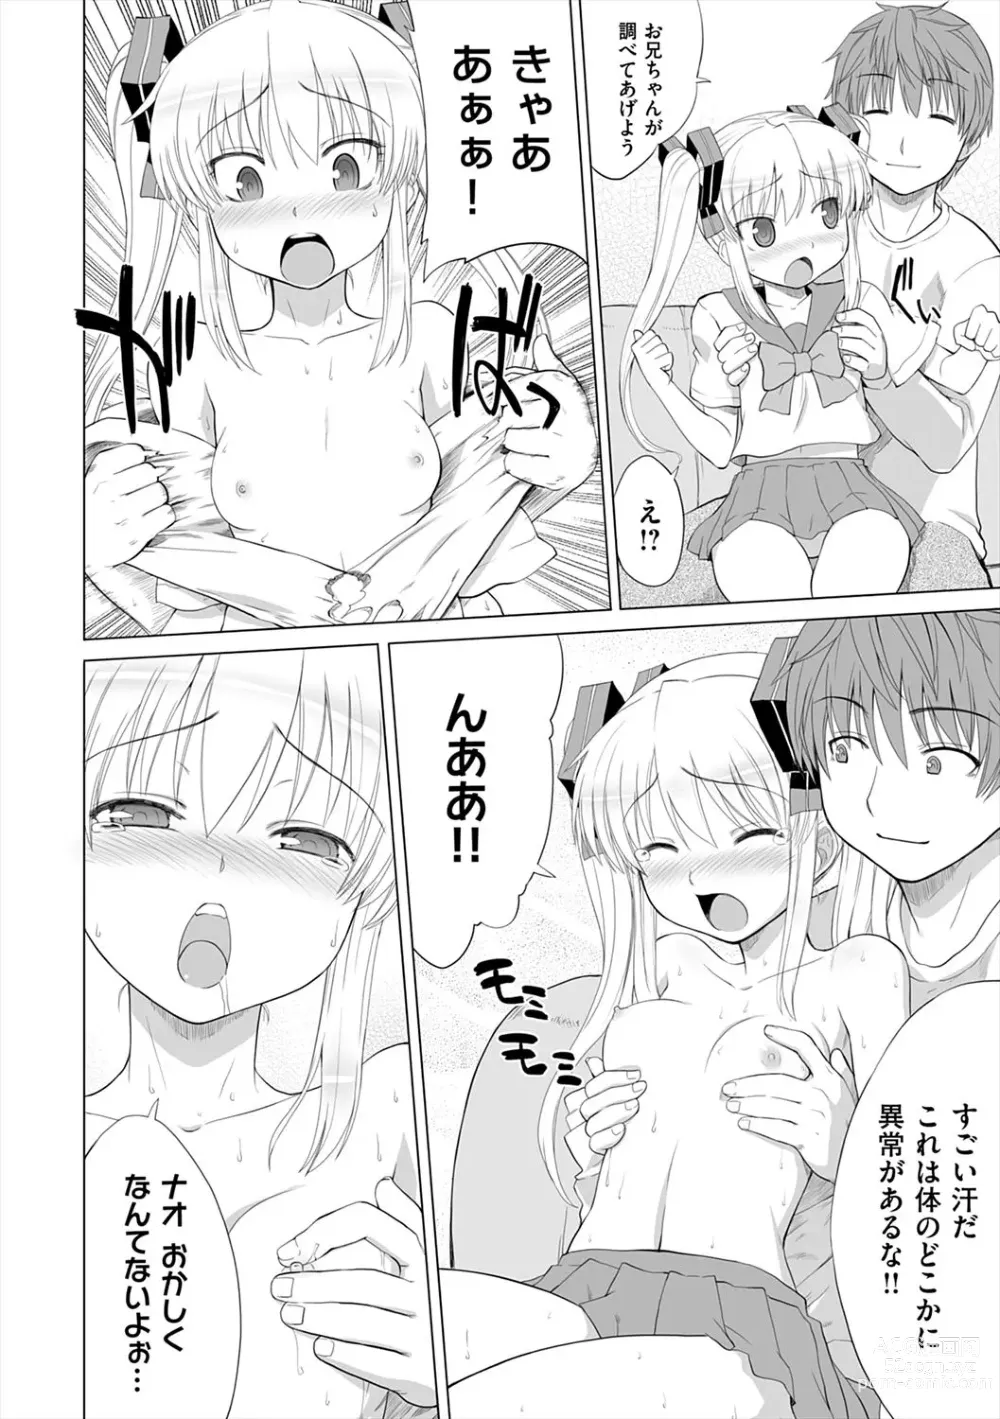 Page 188 of manga Marble Girls